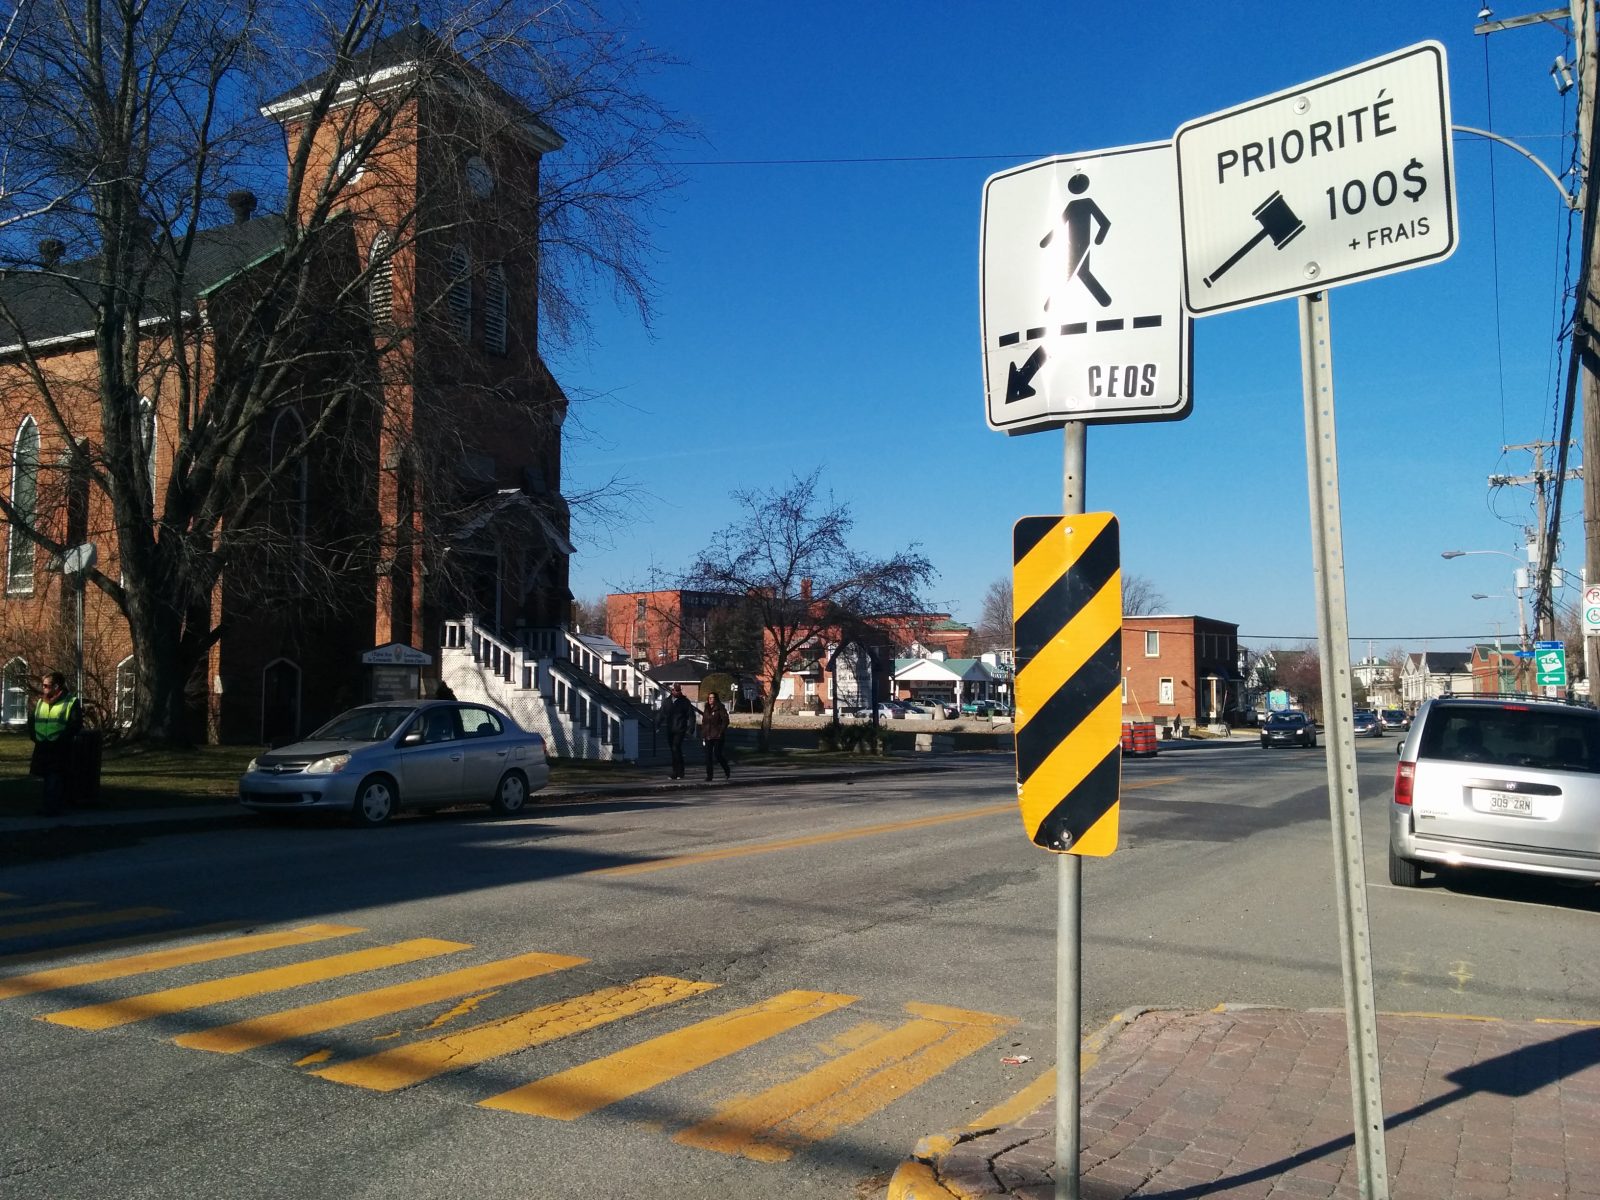 Hit and run reignites crosswalk concerns